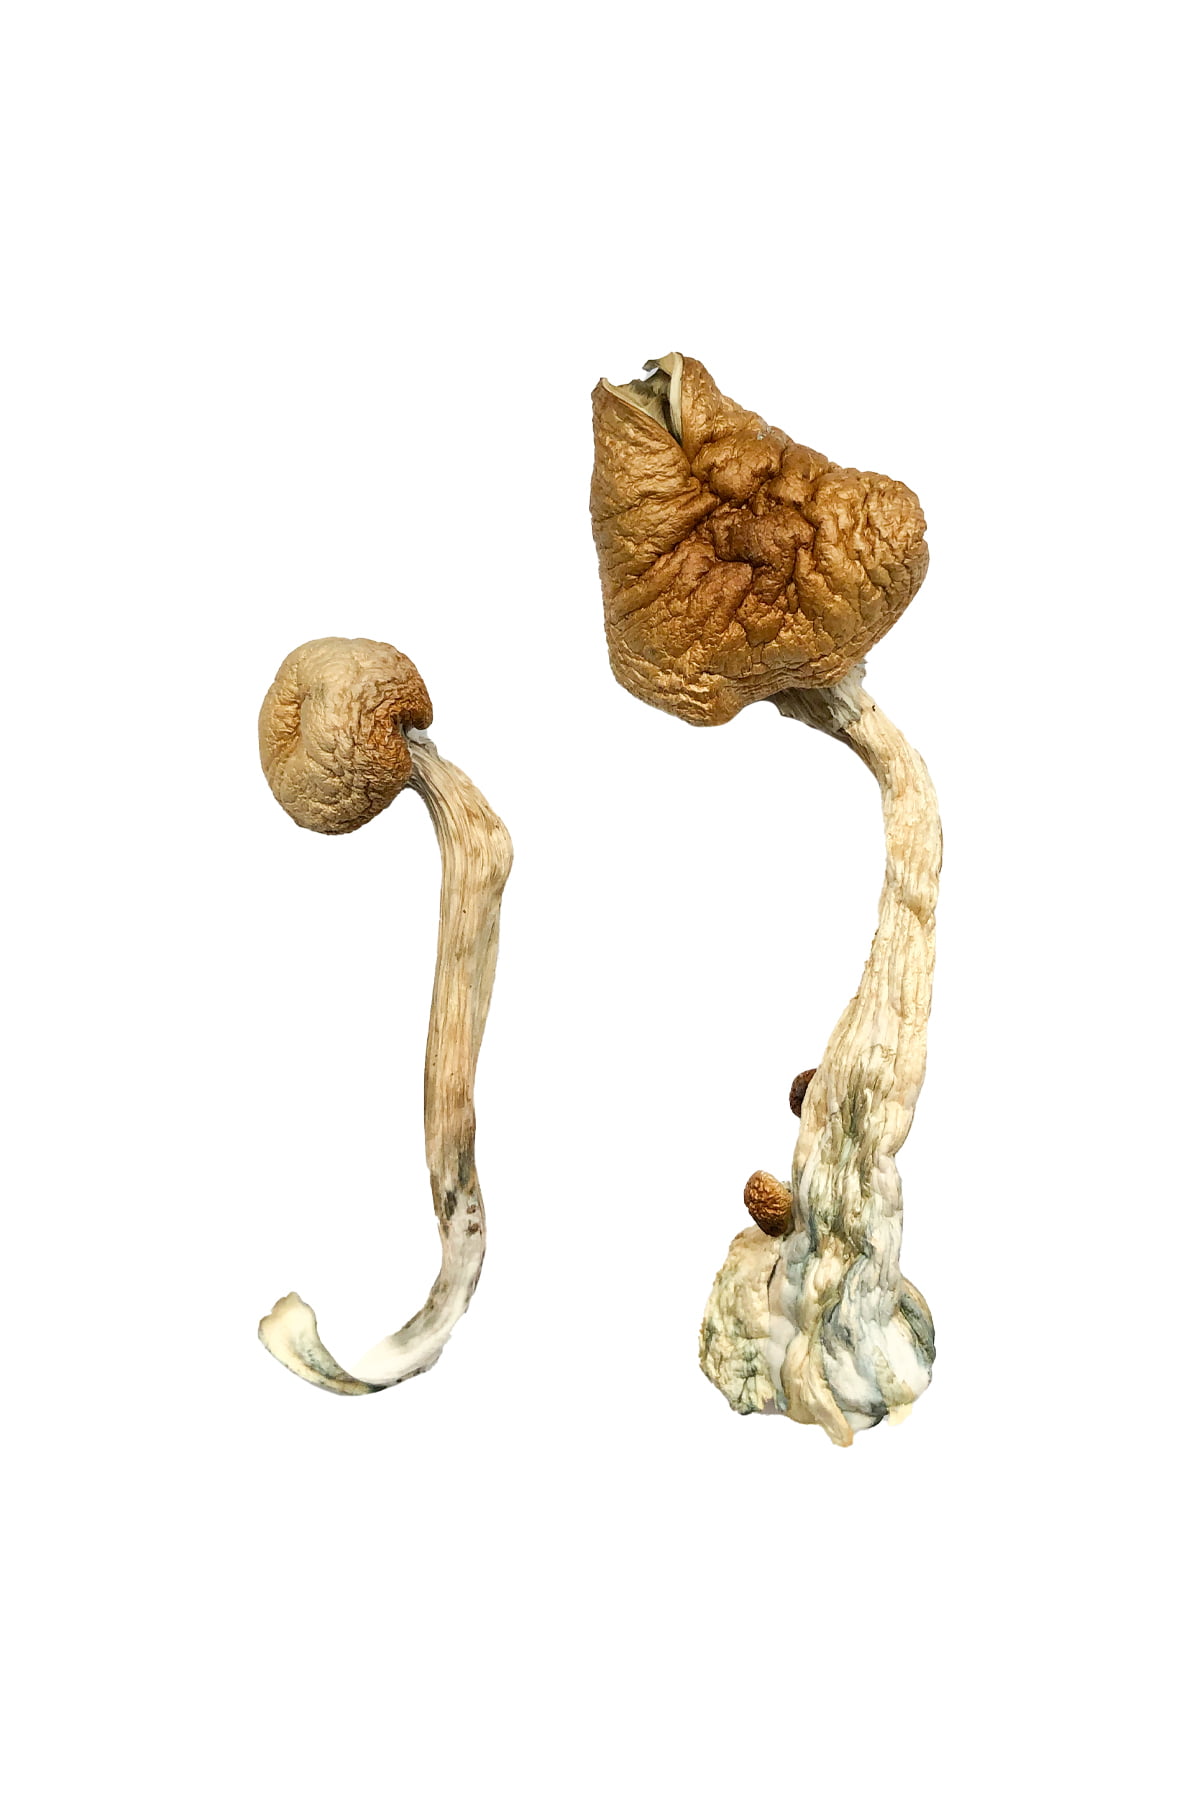 Buy African Transkei Magic Mushrooms Online | Magic Mushrooms Dispensary